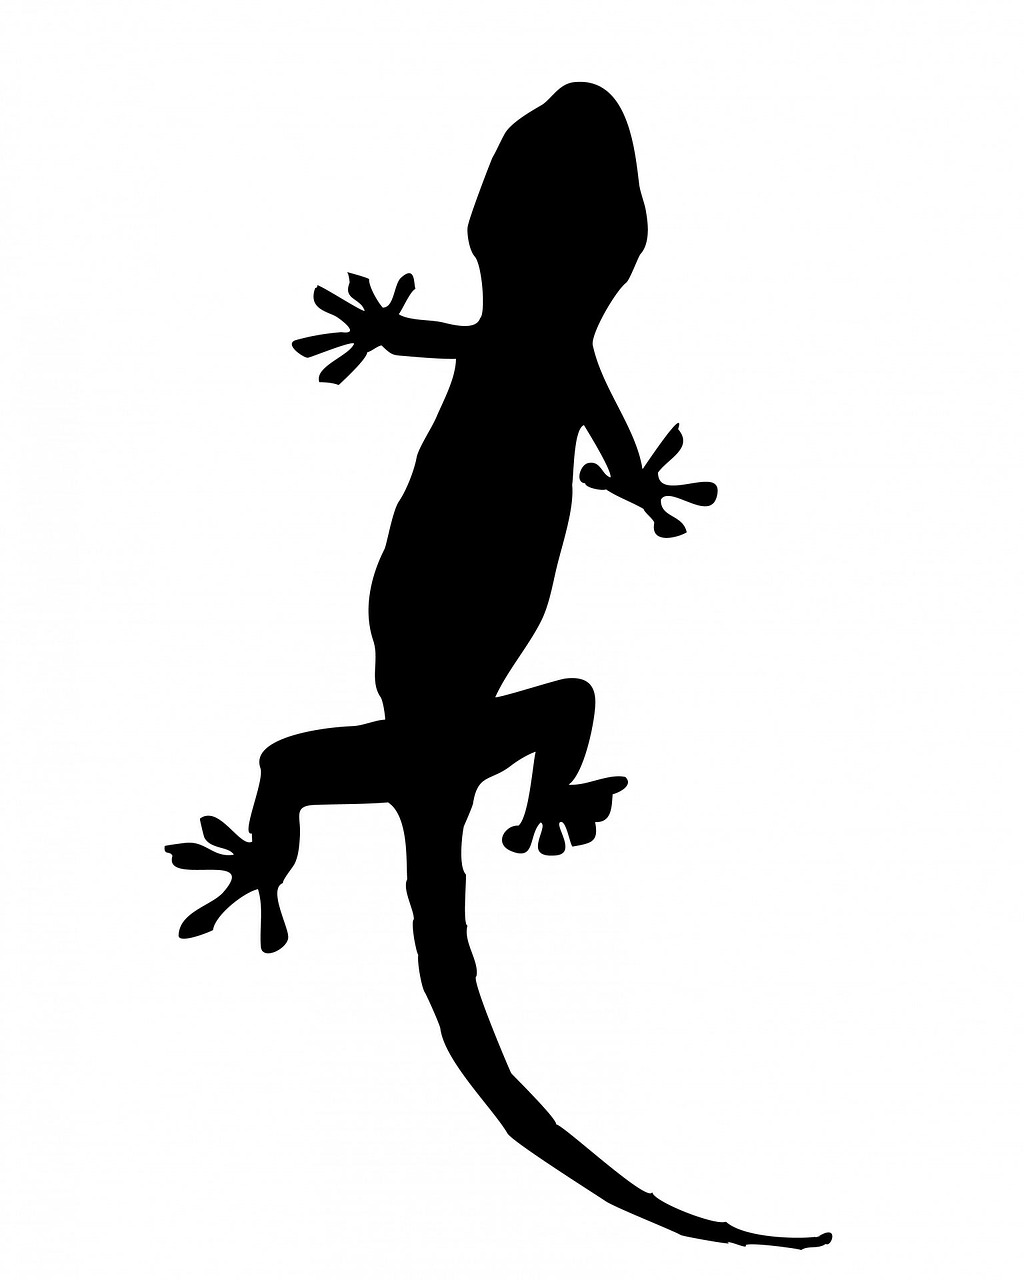 gecko lizard animal free photo